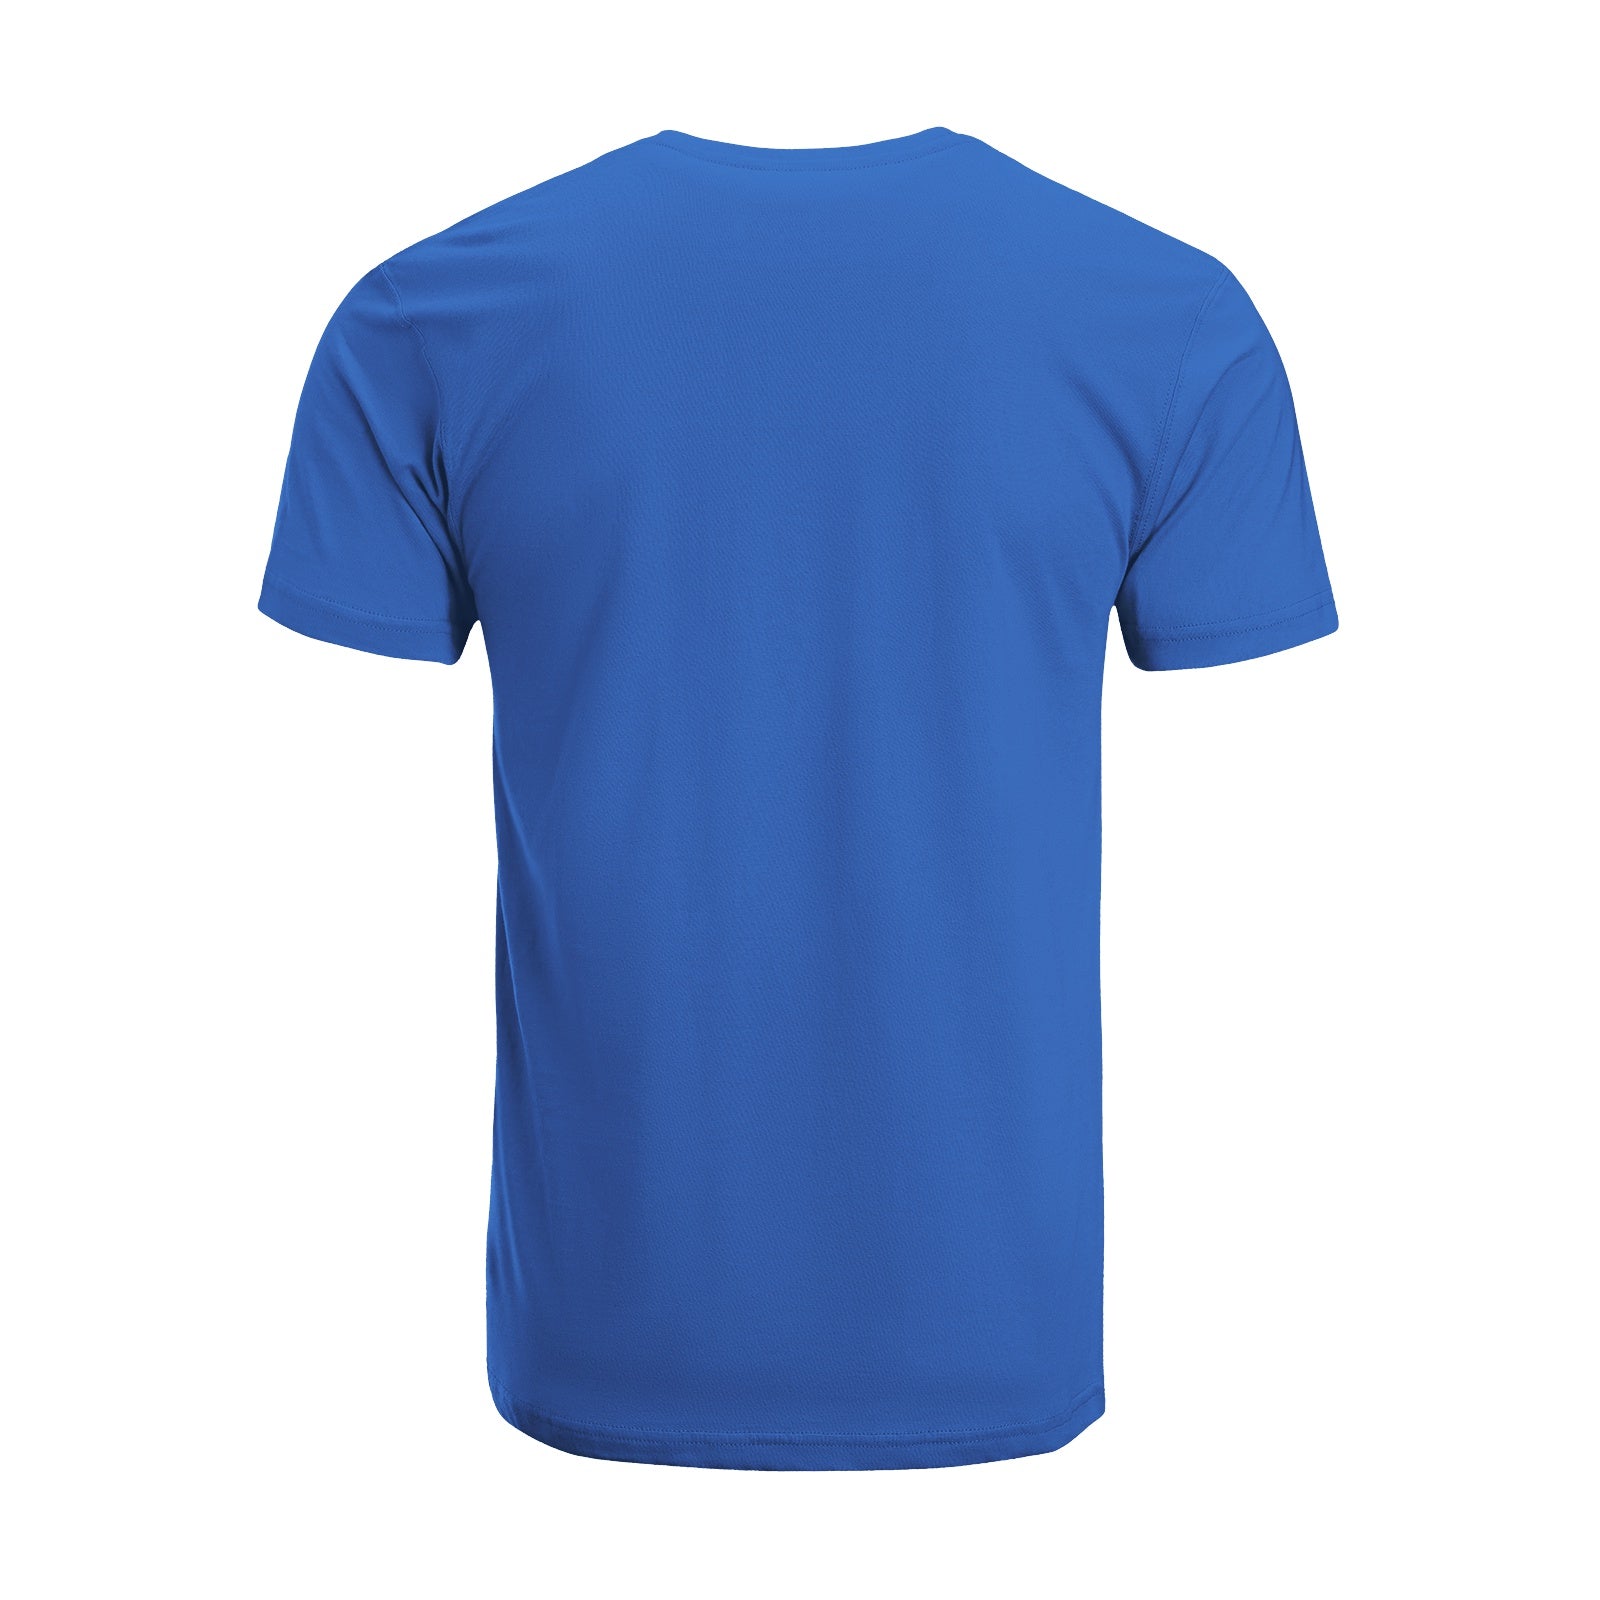 Unisex Short Sleeve Crew Neck Cotton Jersey T-Shirt Gym No. 39 - Tara-Outfits.com